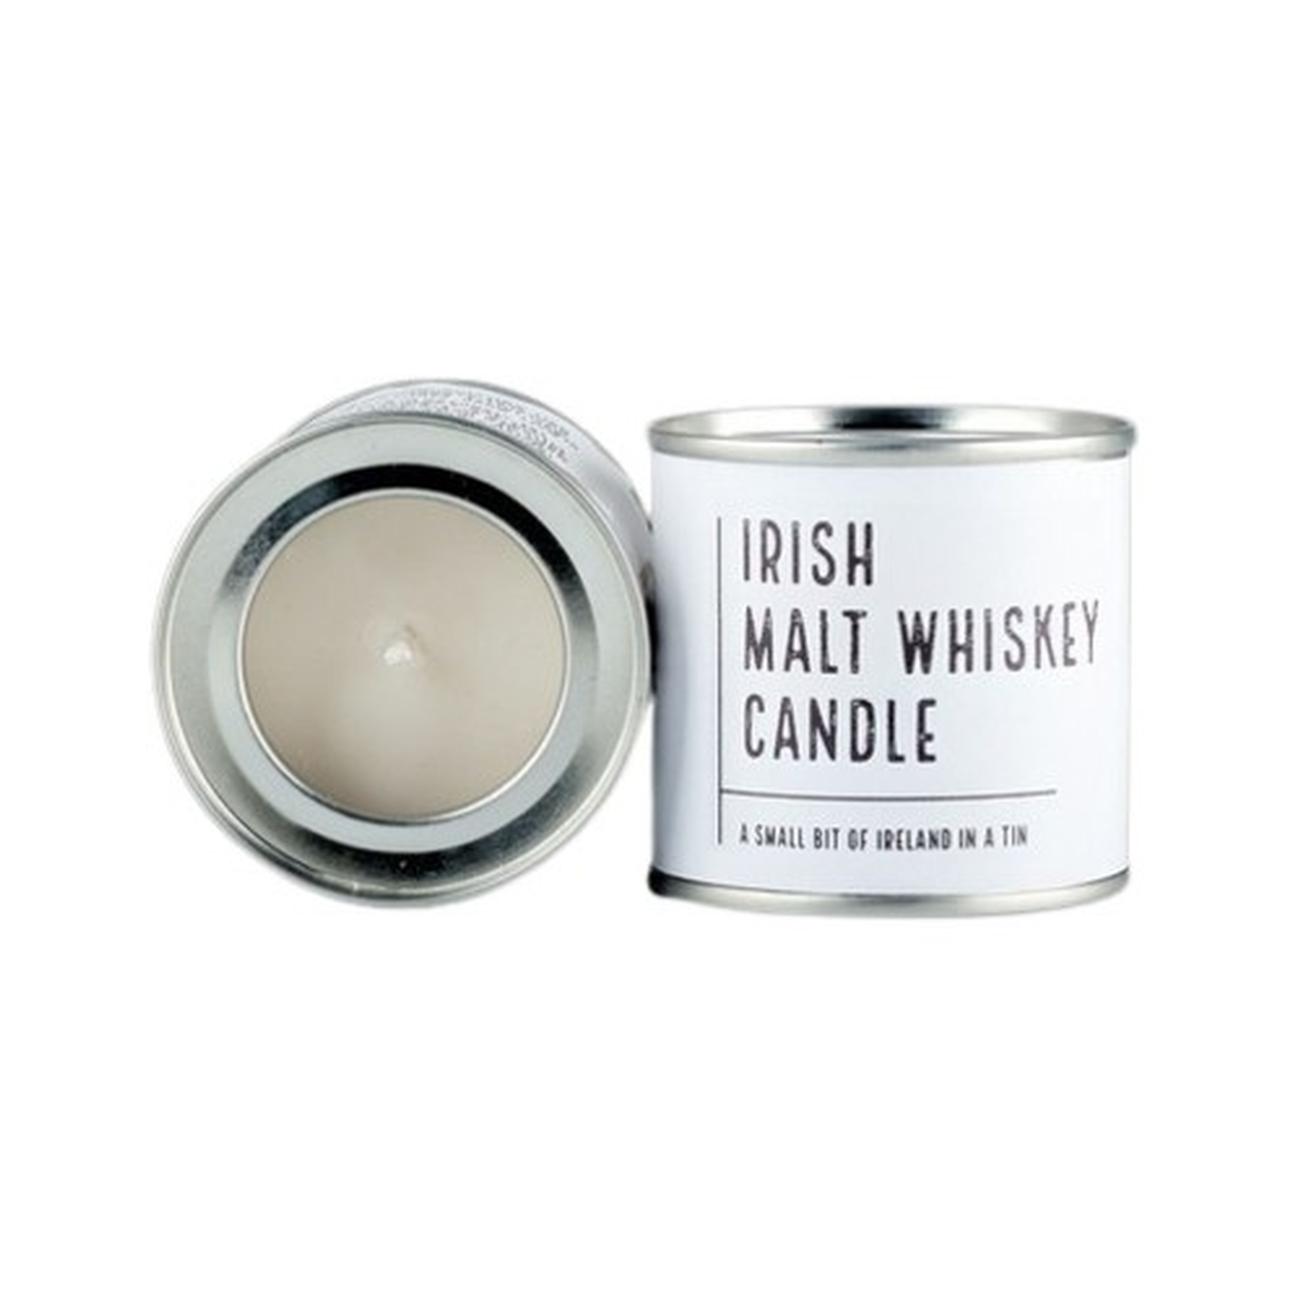 irish-malt-whiskey-candle-tins-small - Irish Malt Whiskey Candle Tins Small